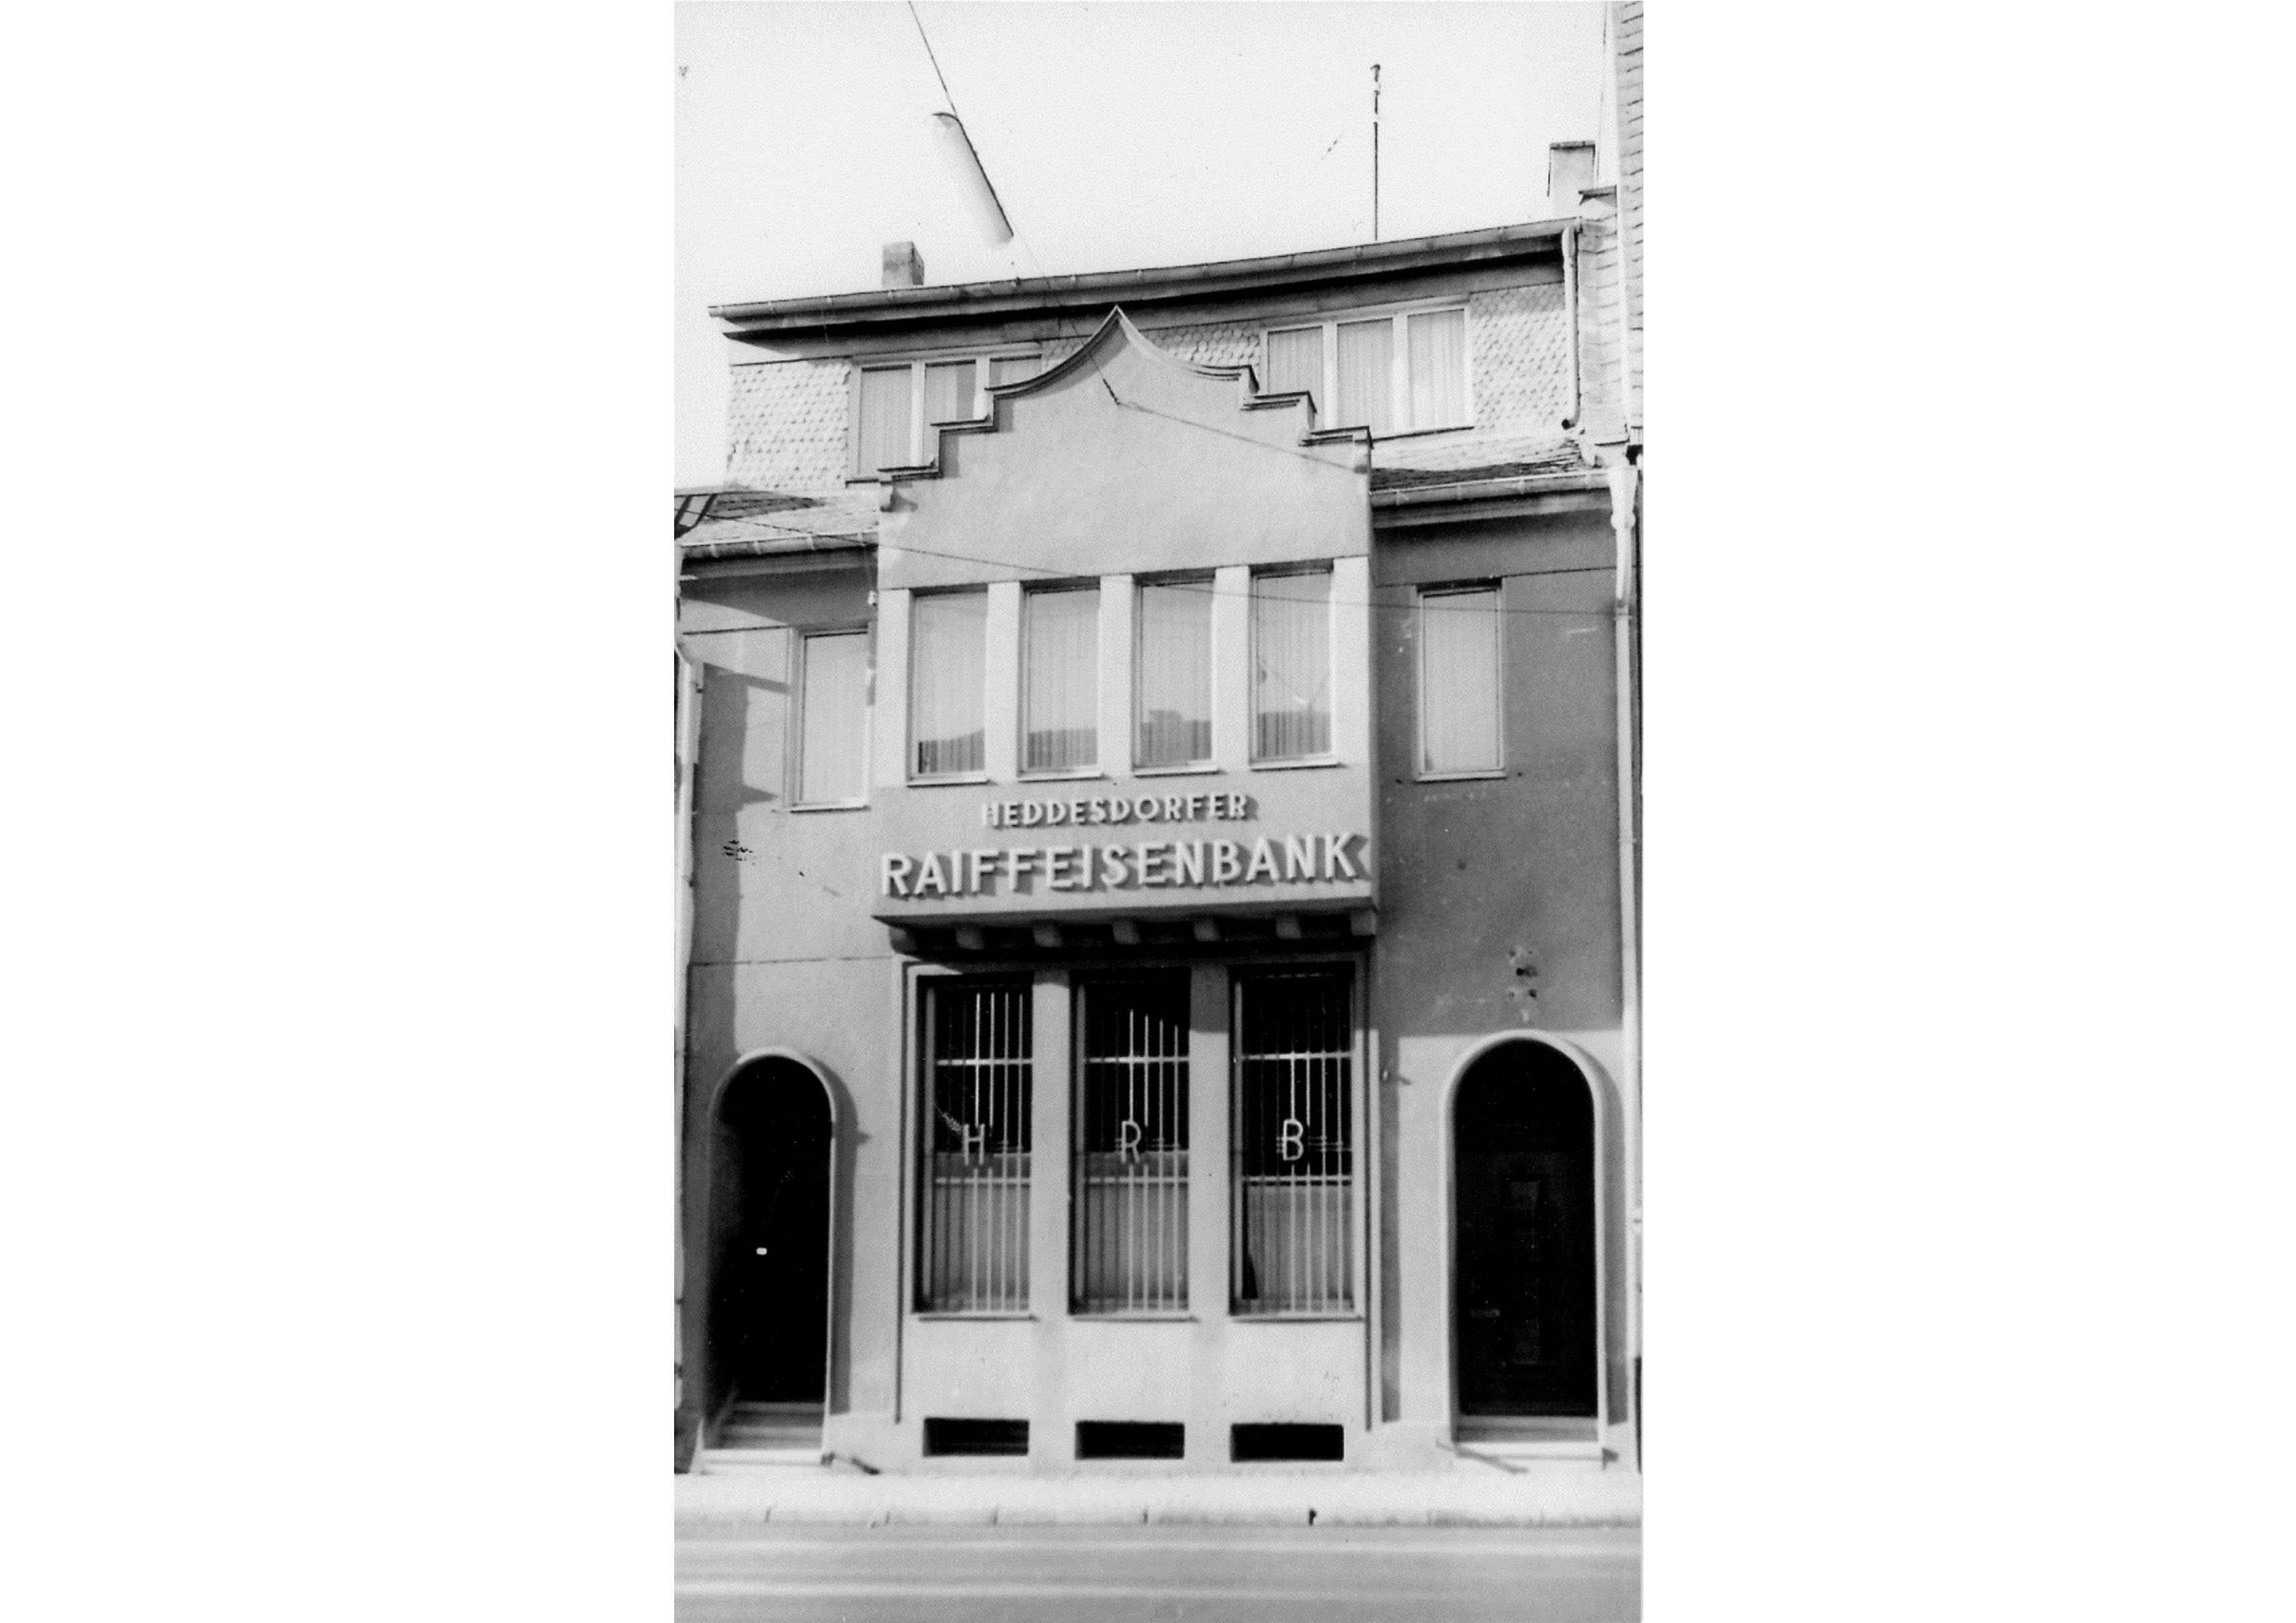 1959: Heddesdorfer Raiffeisenbank.